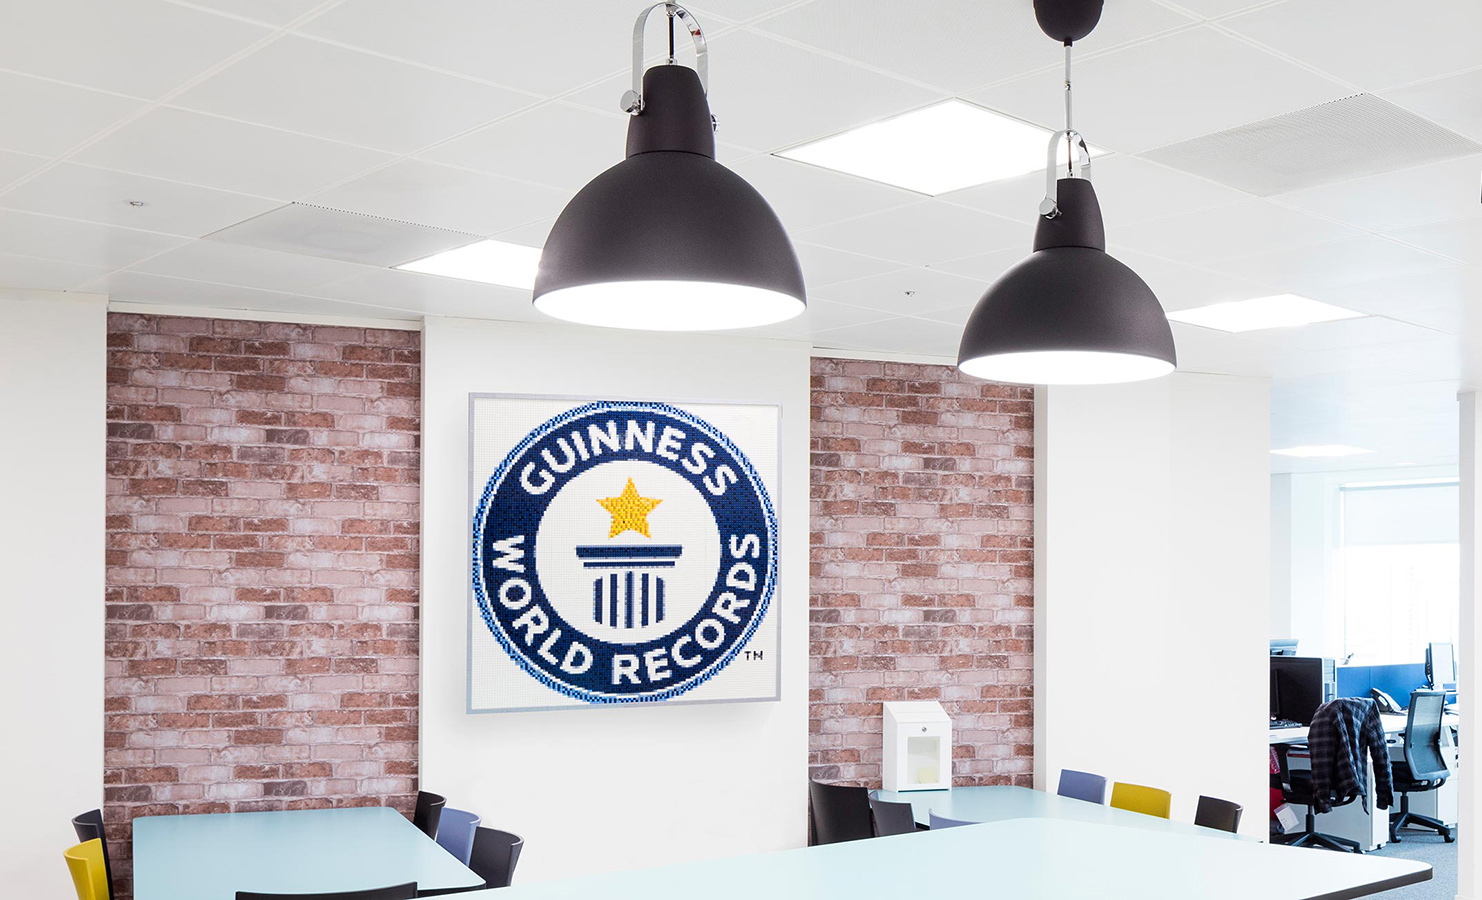 A Peek Inside Guinness World Records’ London Headquarters